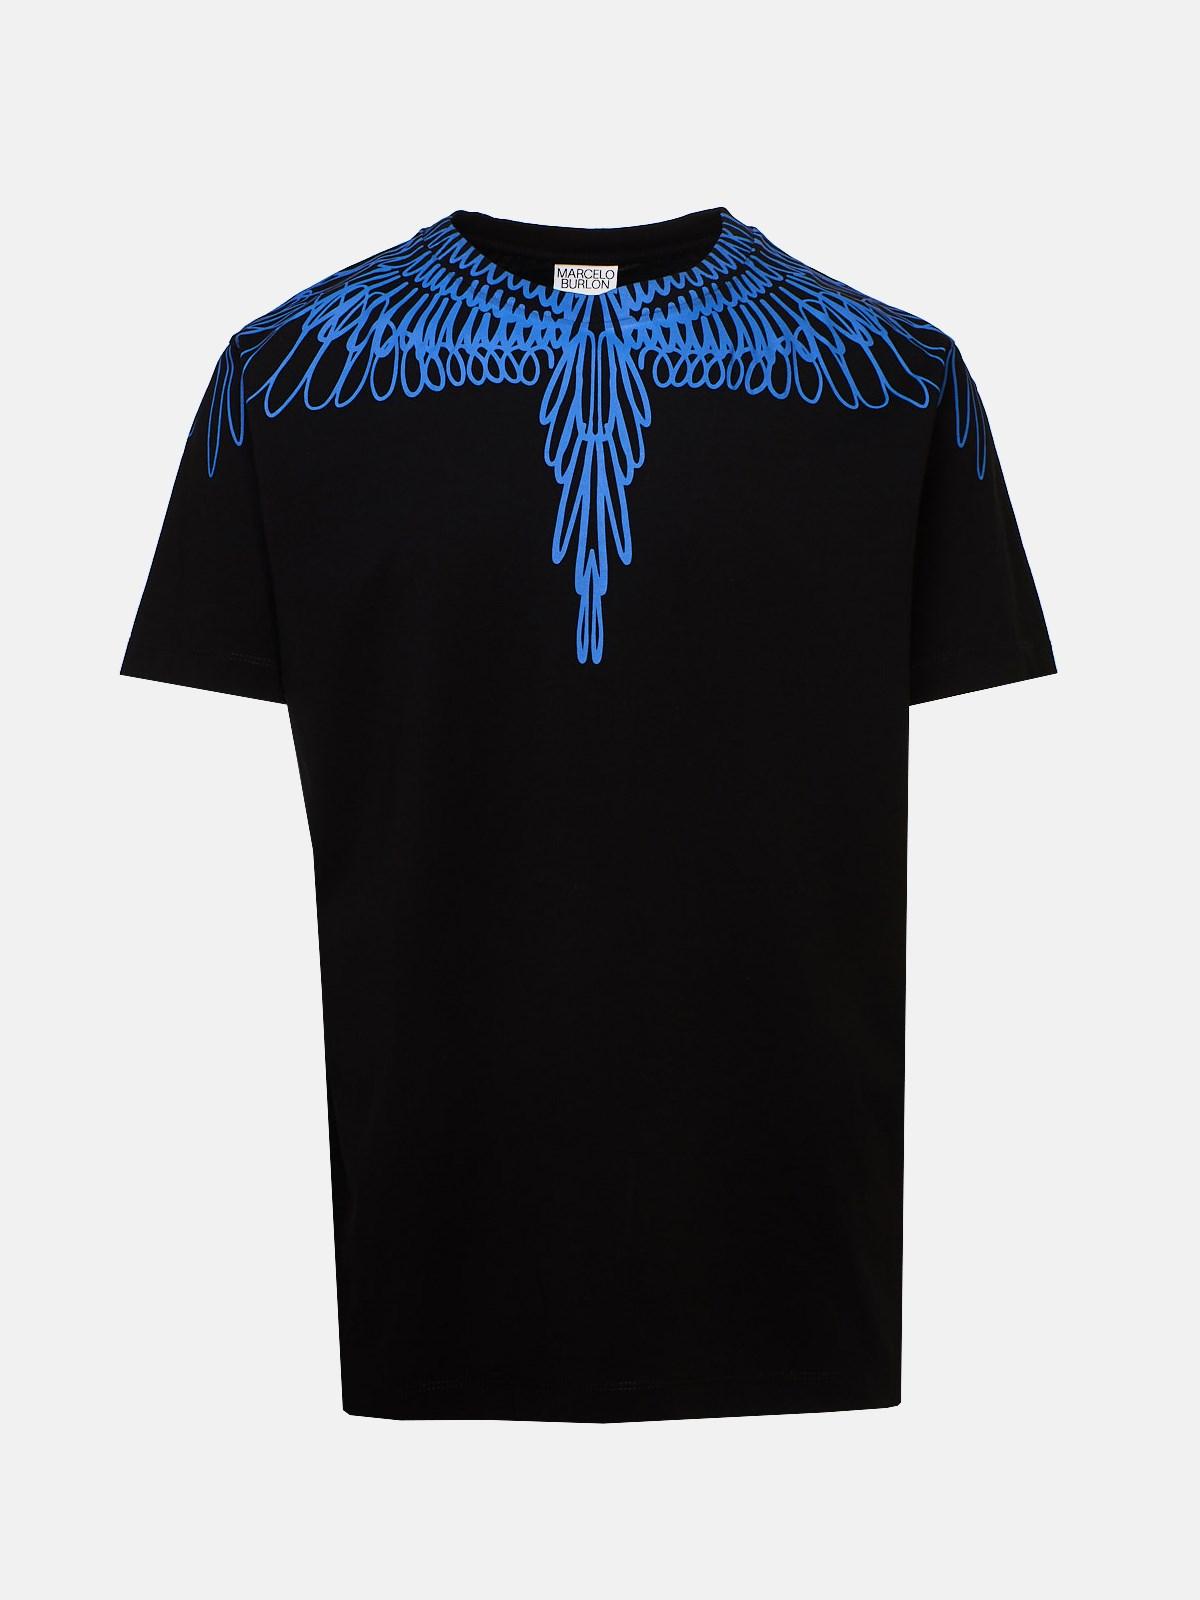 Marcelo Burlon T-shirt Pictorial Ali Blu Nera in Blue for Men - Lyst